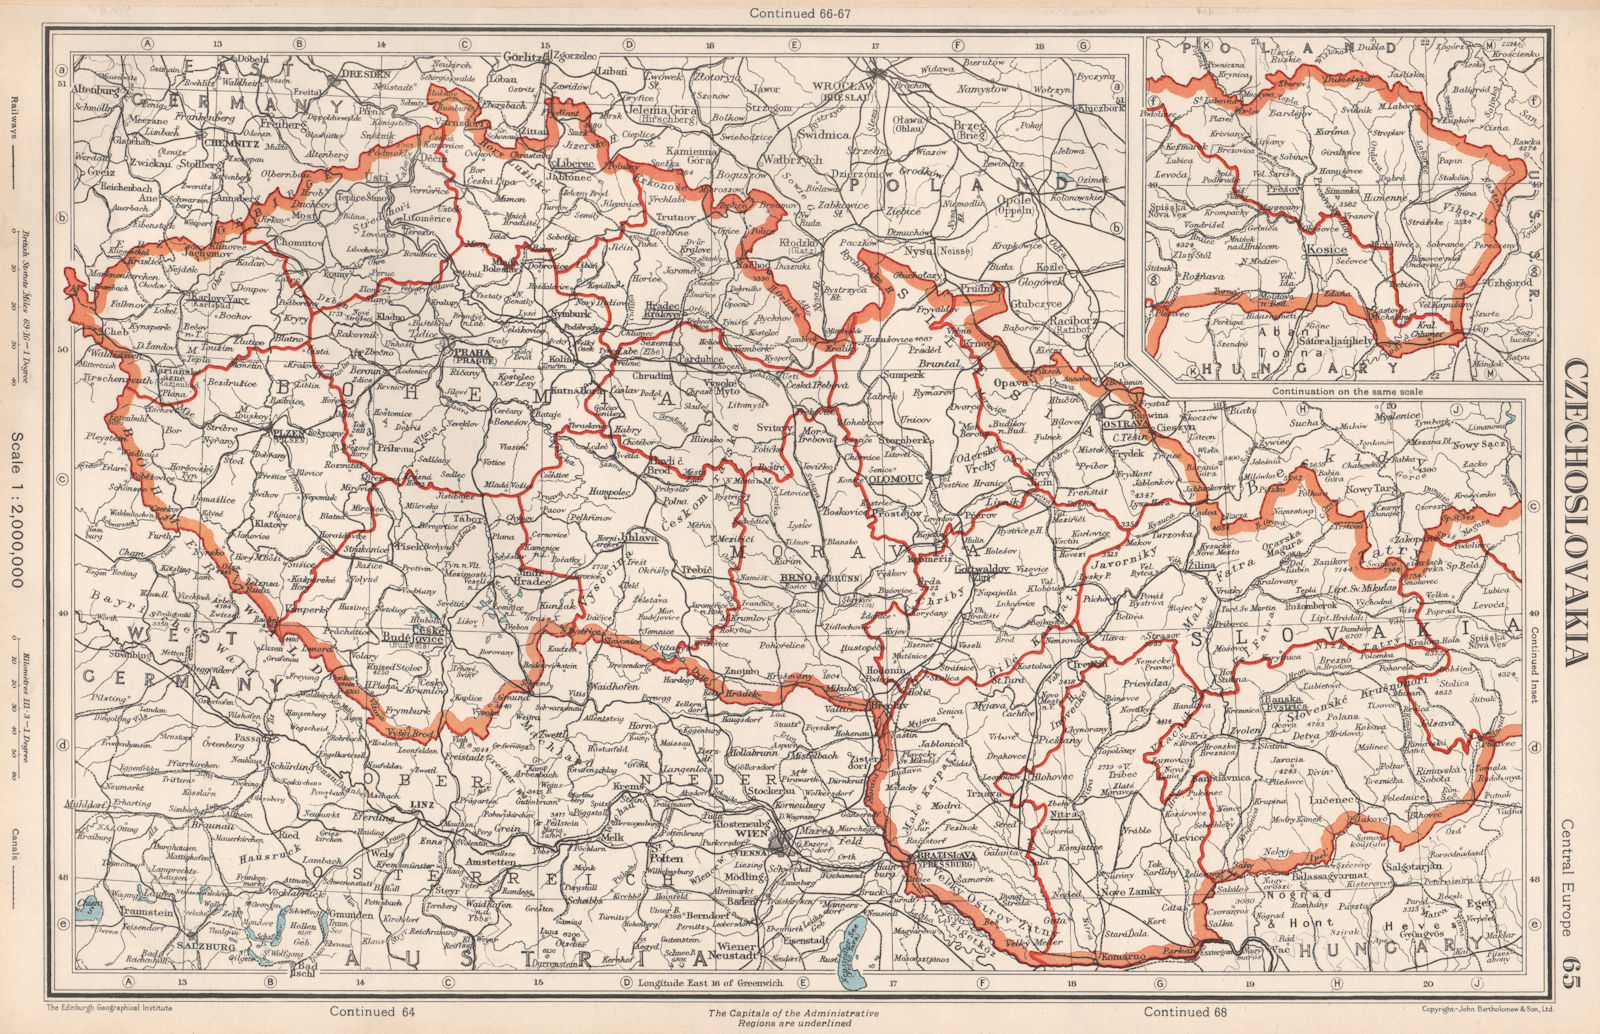 CZECHOSLOVAKIA. Administrative divisions. Post 1945 borders.BARTHOLOMEW 1952 map